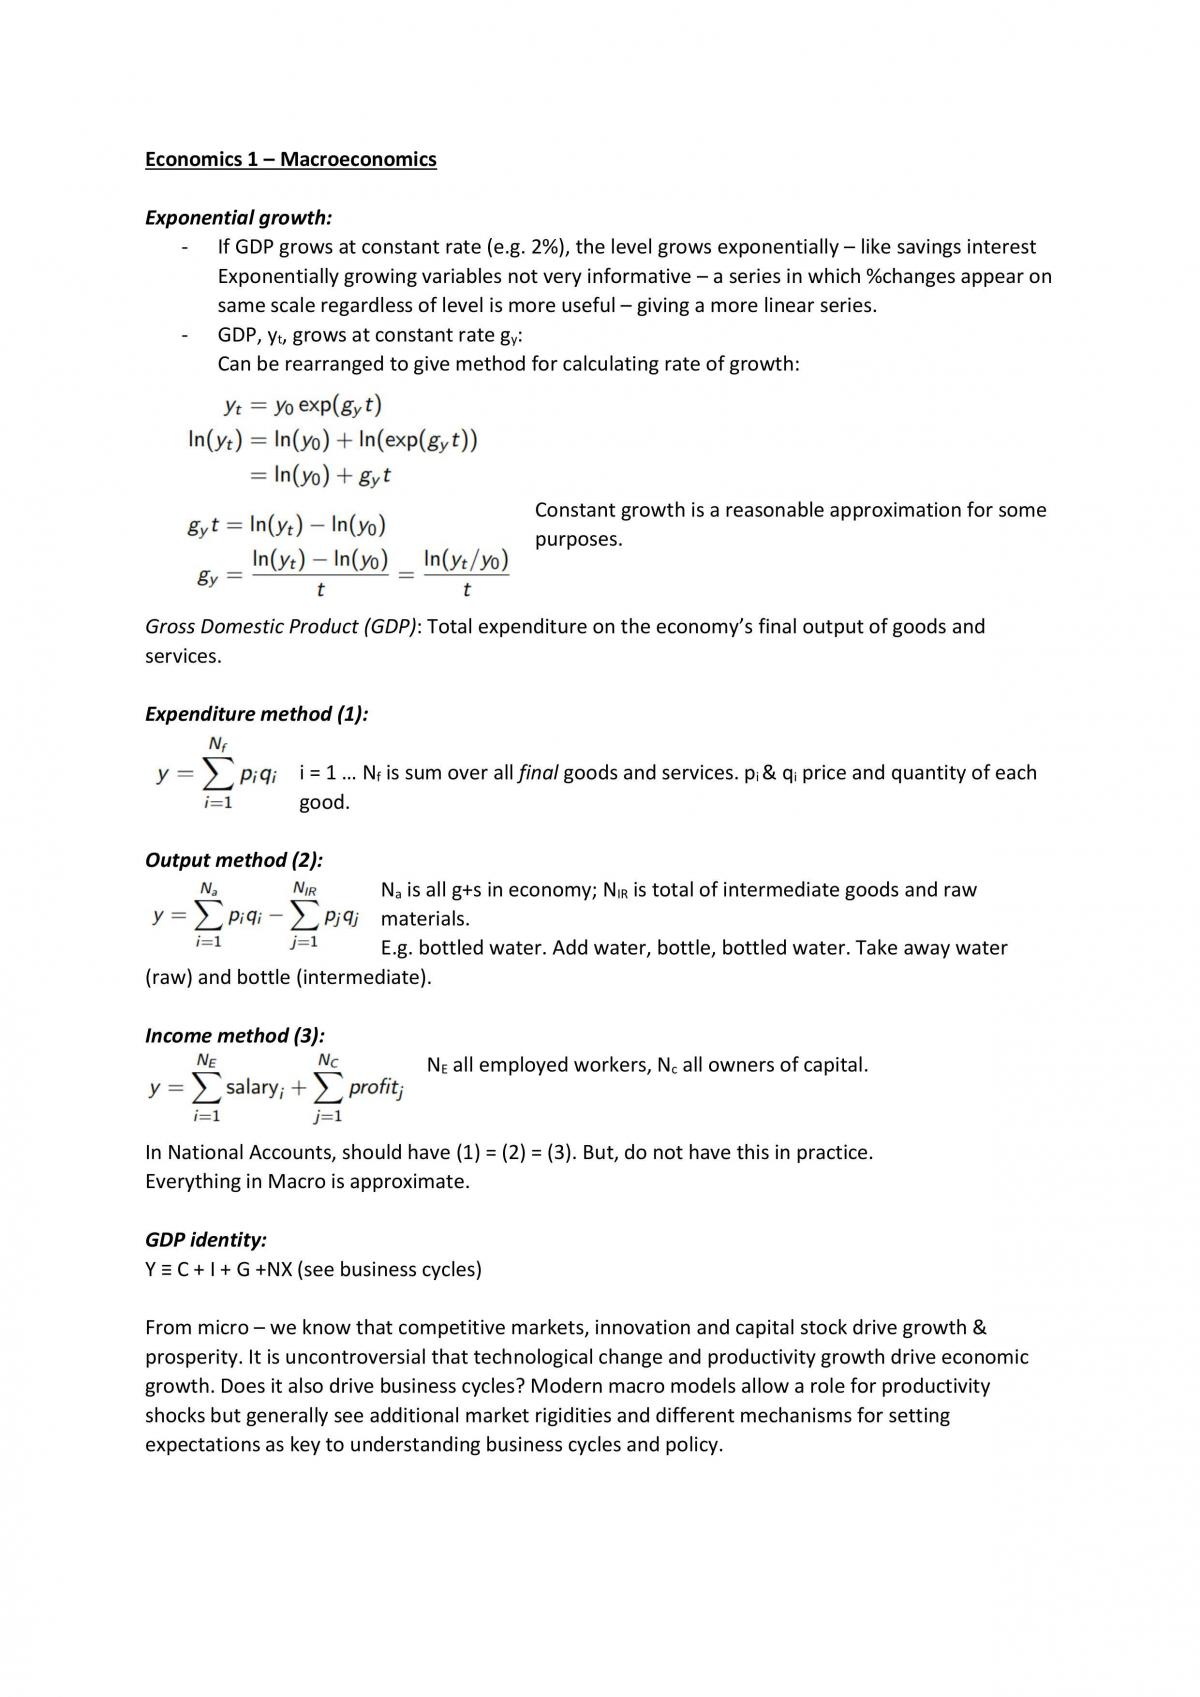 Economics 1 Macroeconomics Notes - Page 1